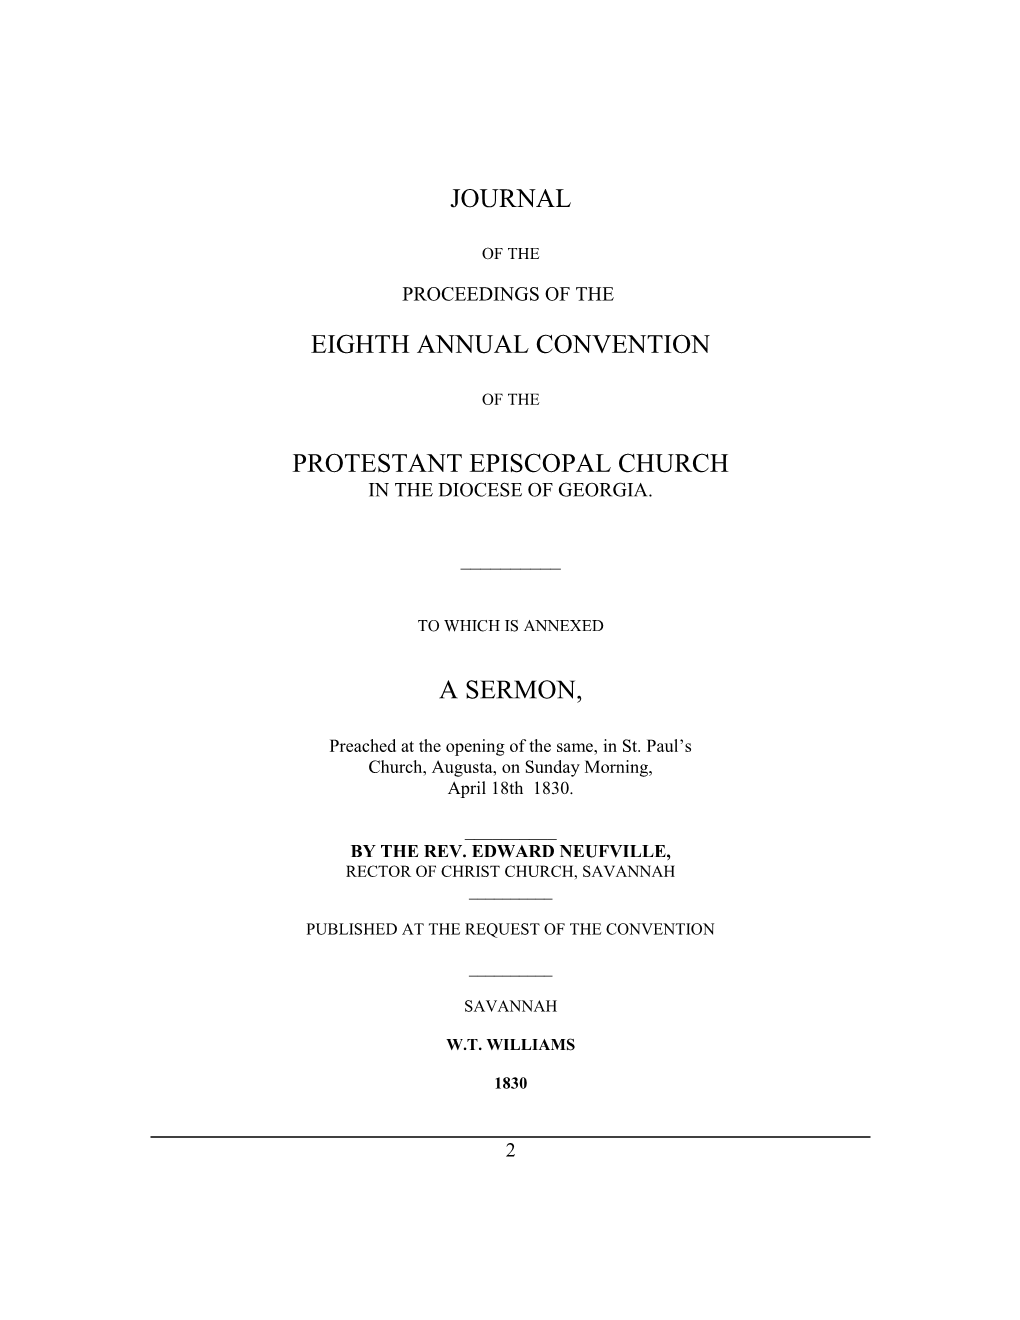 Proceedings of The